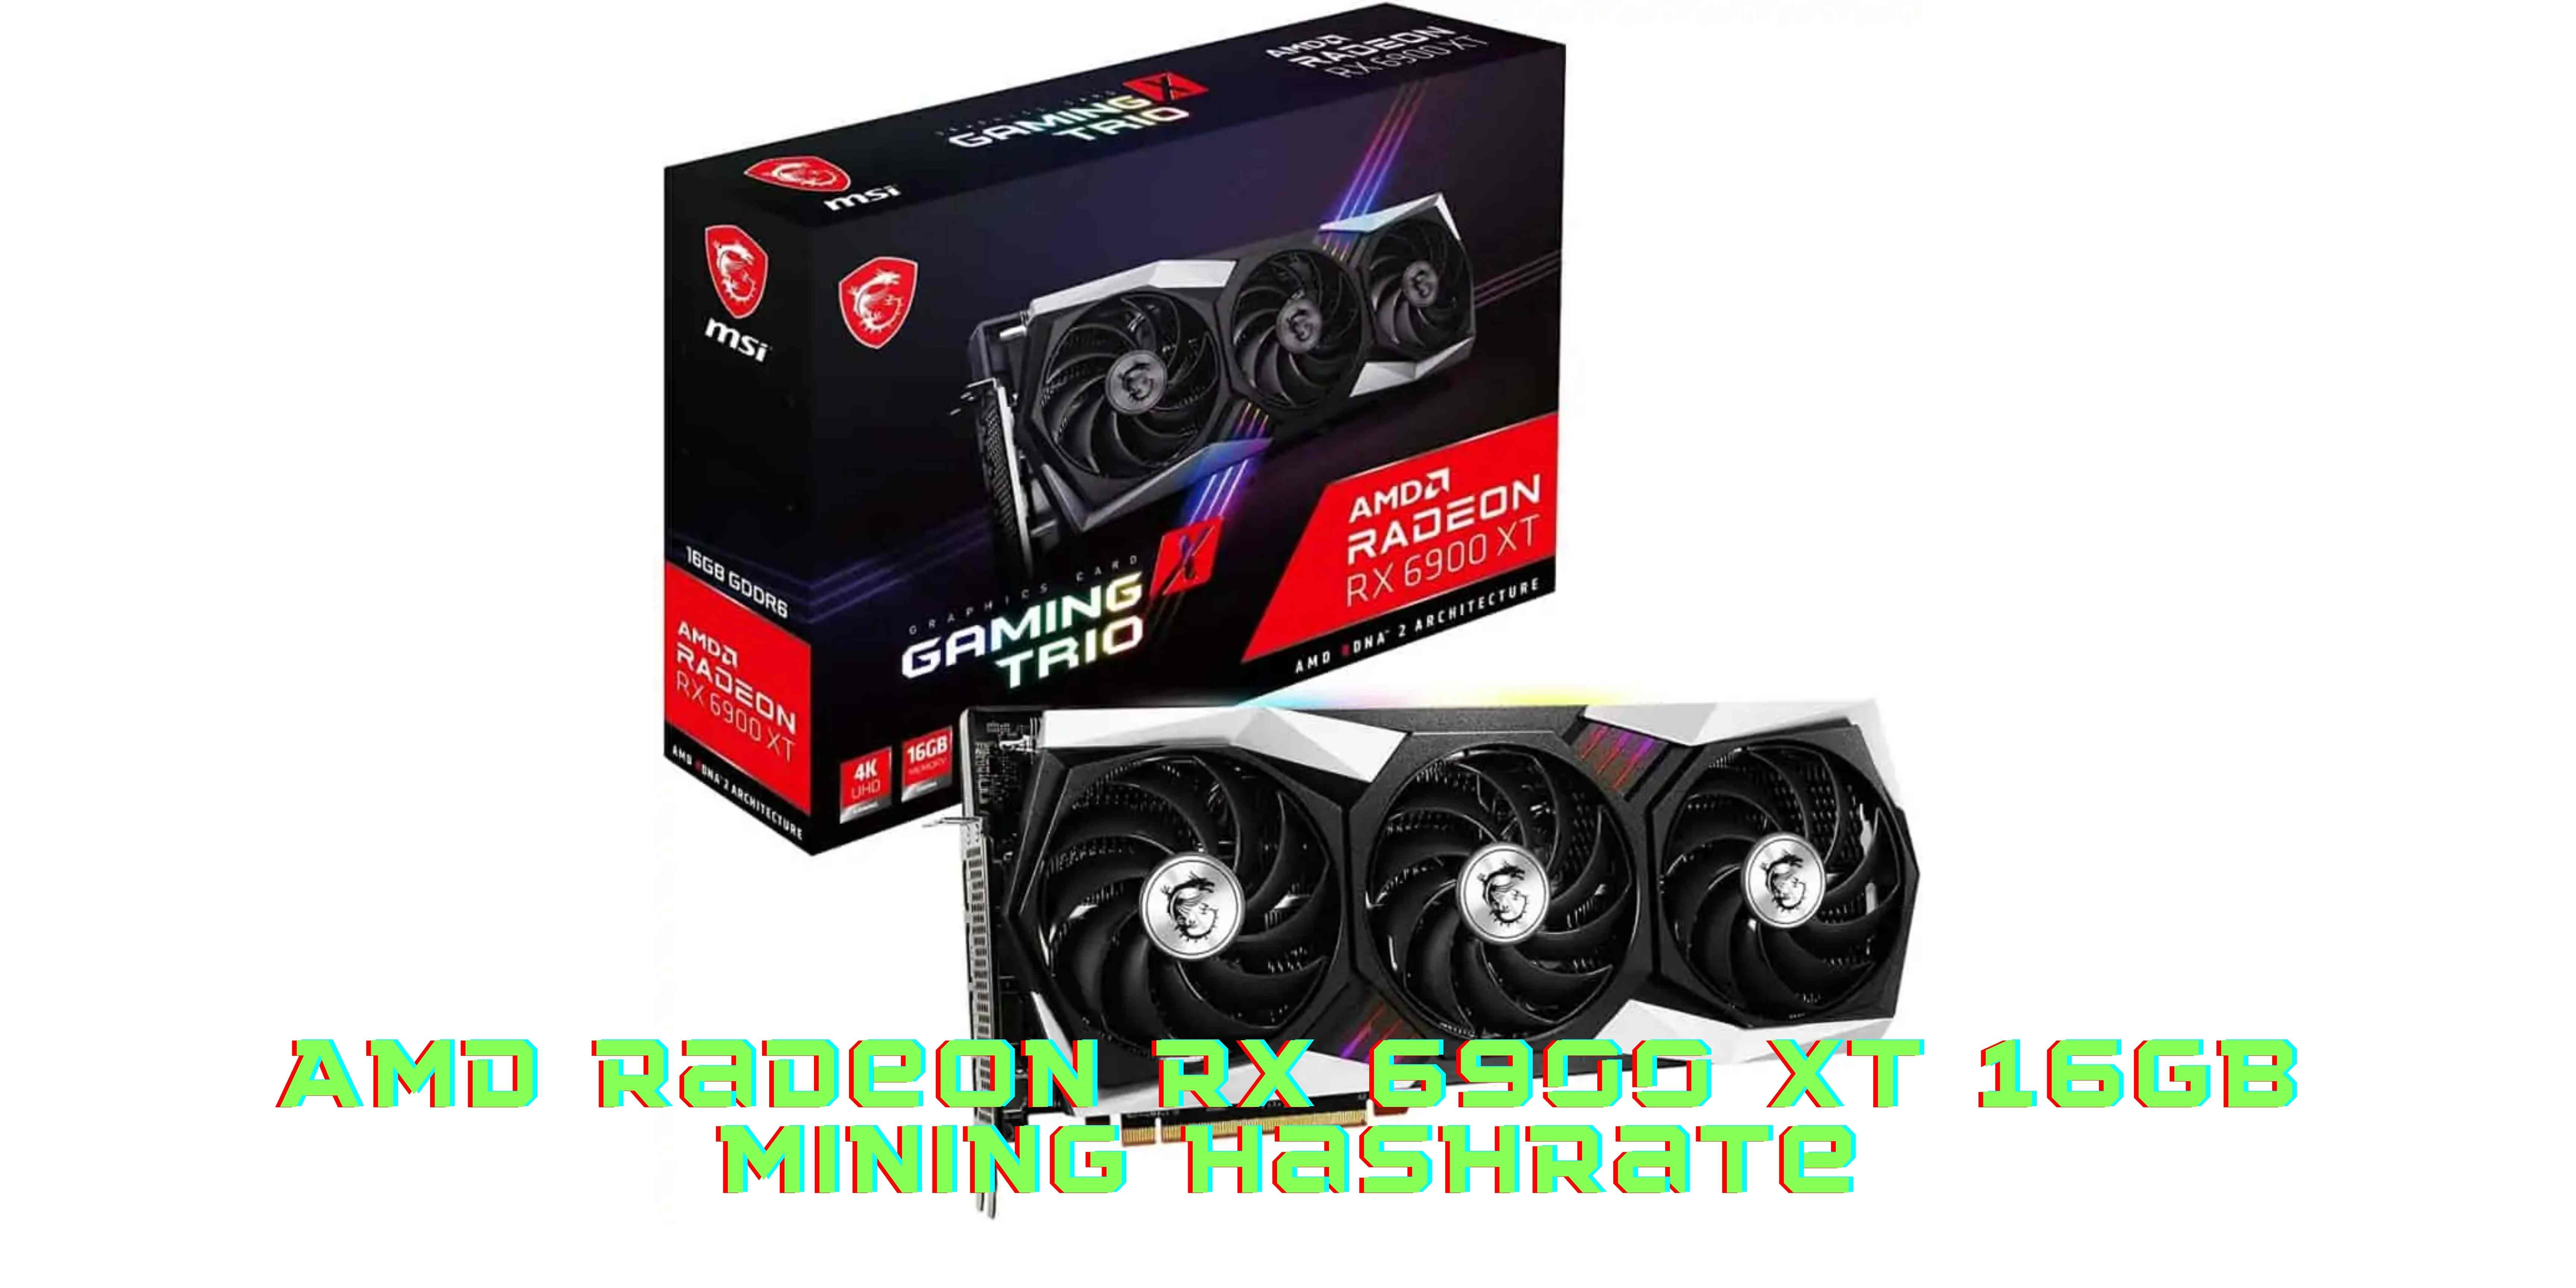 AMD Radeon RX 6900 XT 16GB Mining Hashrate, Profitability, And Specifications